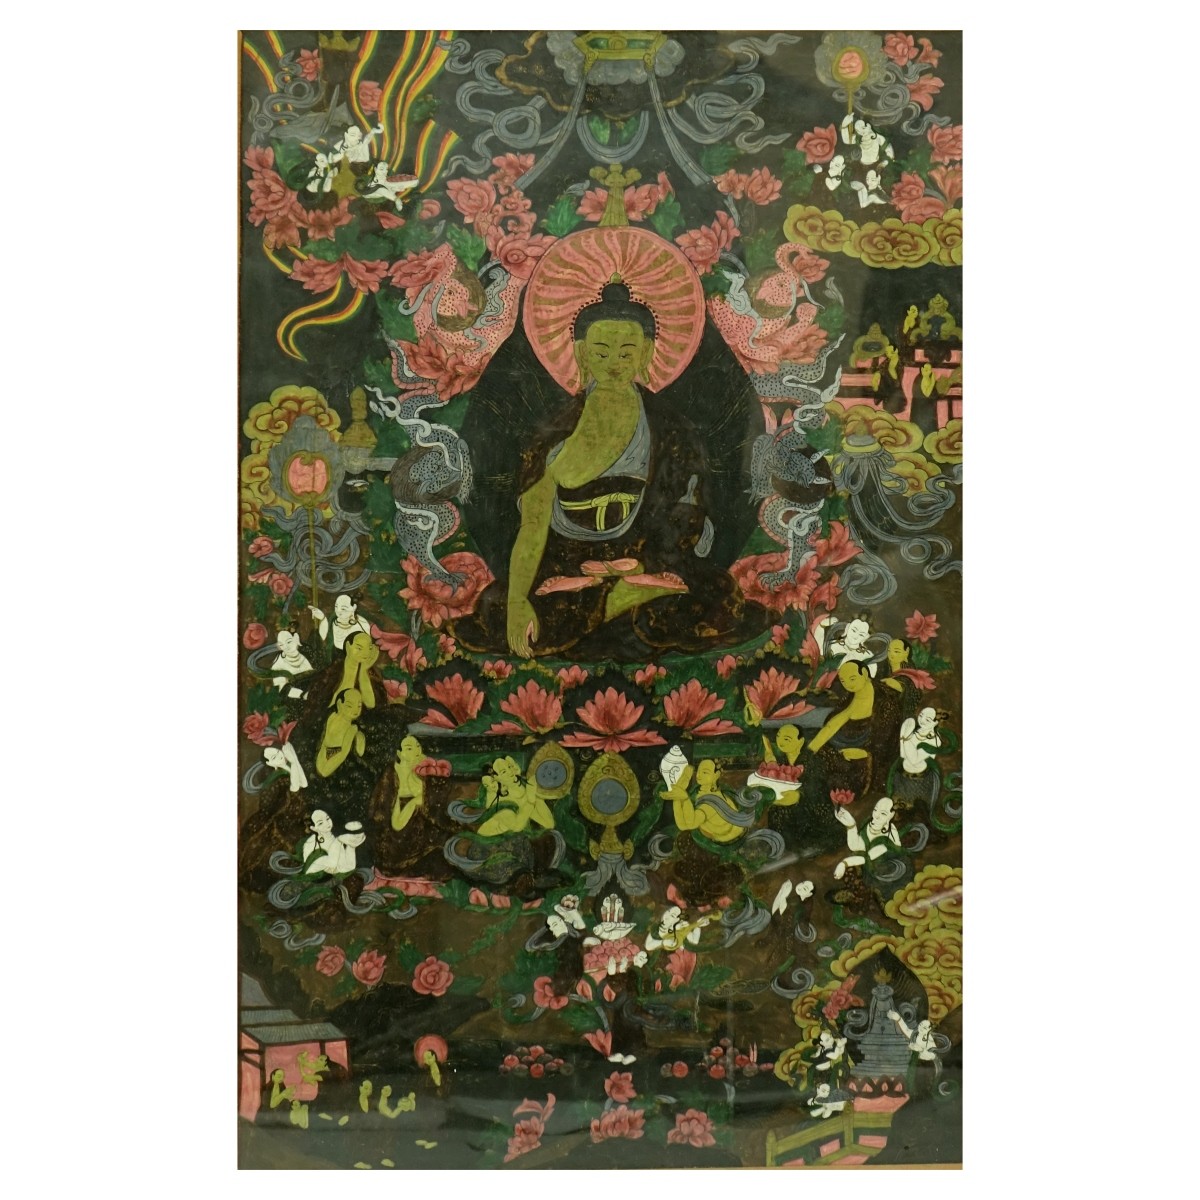 19/20th C. Tibetan Buddhist Painting